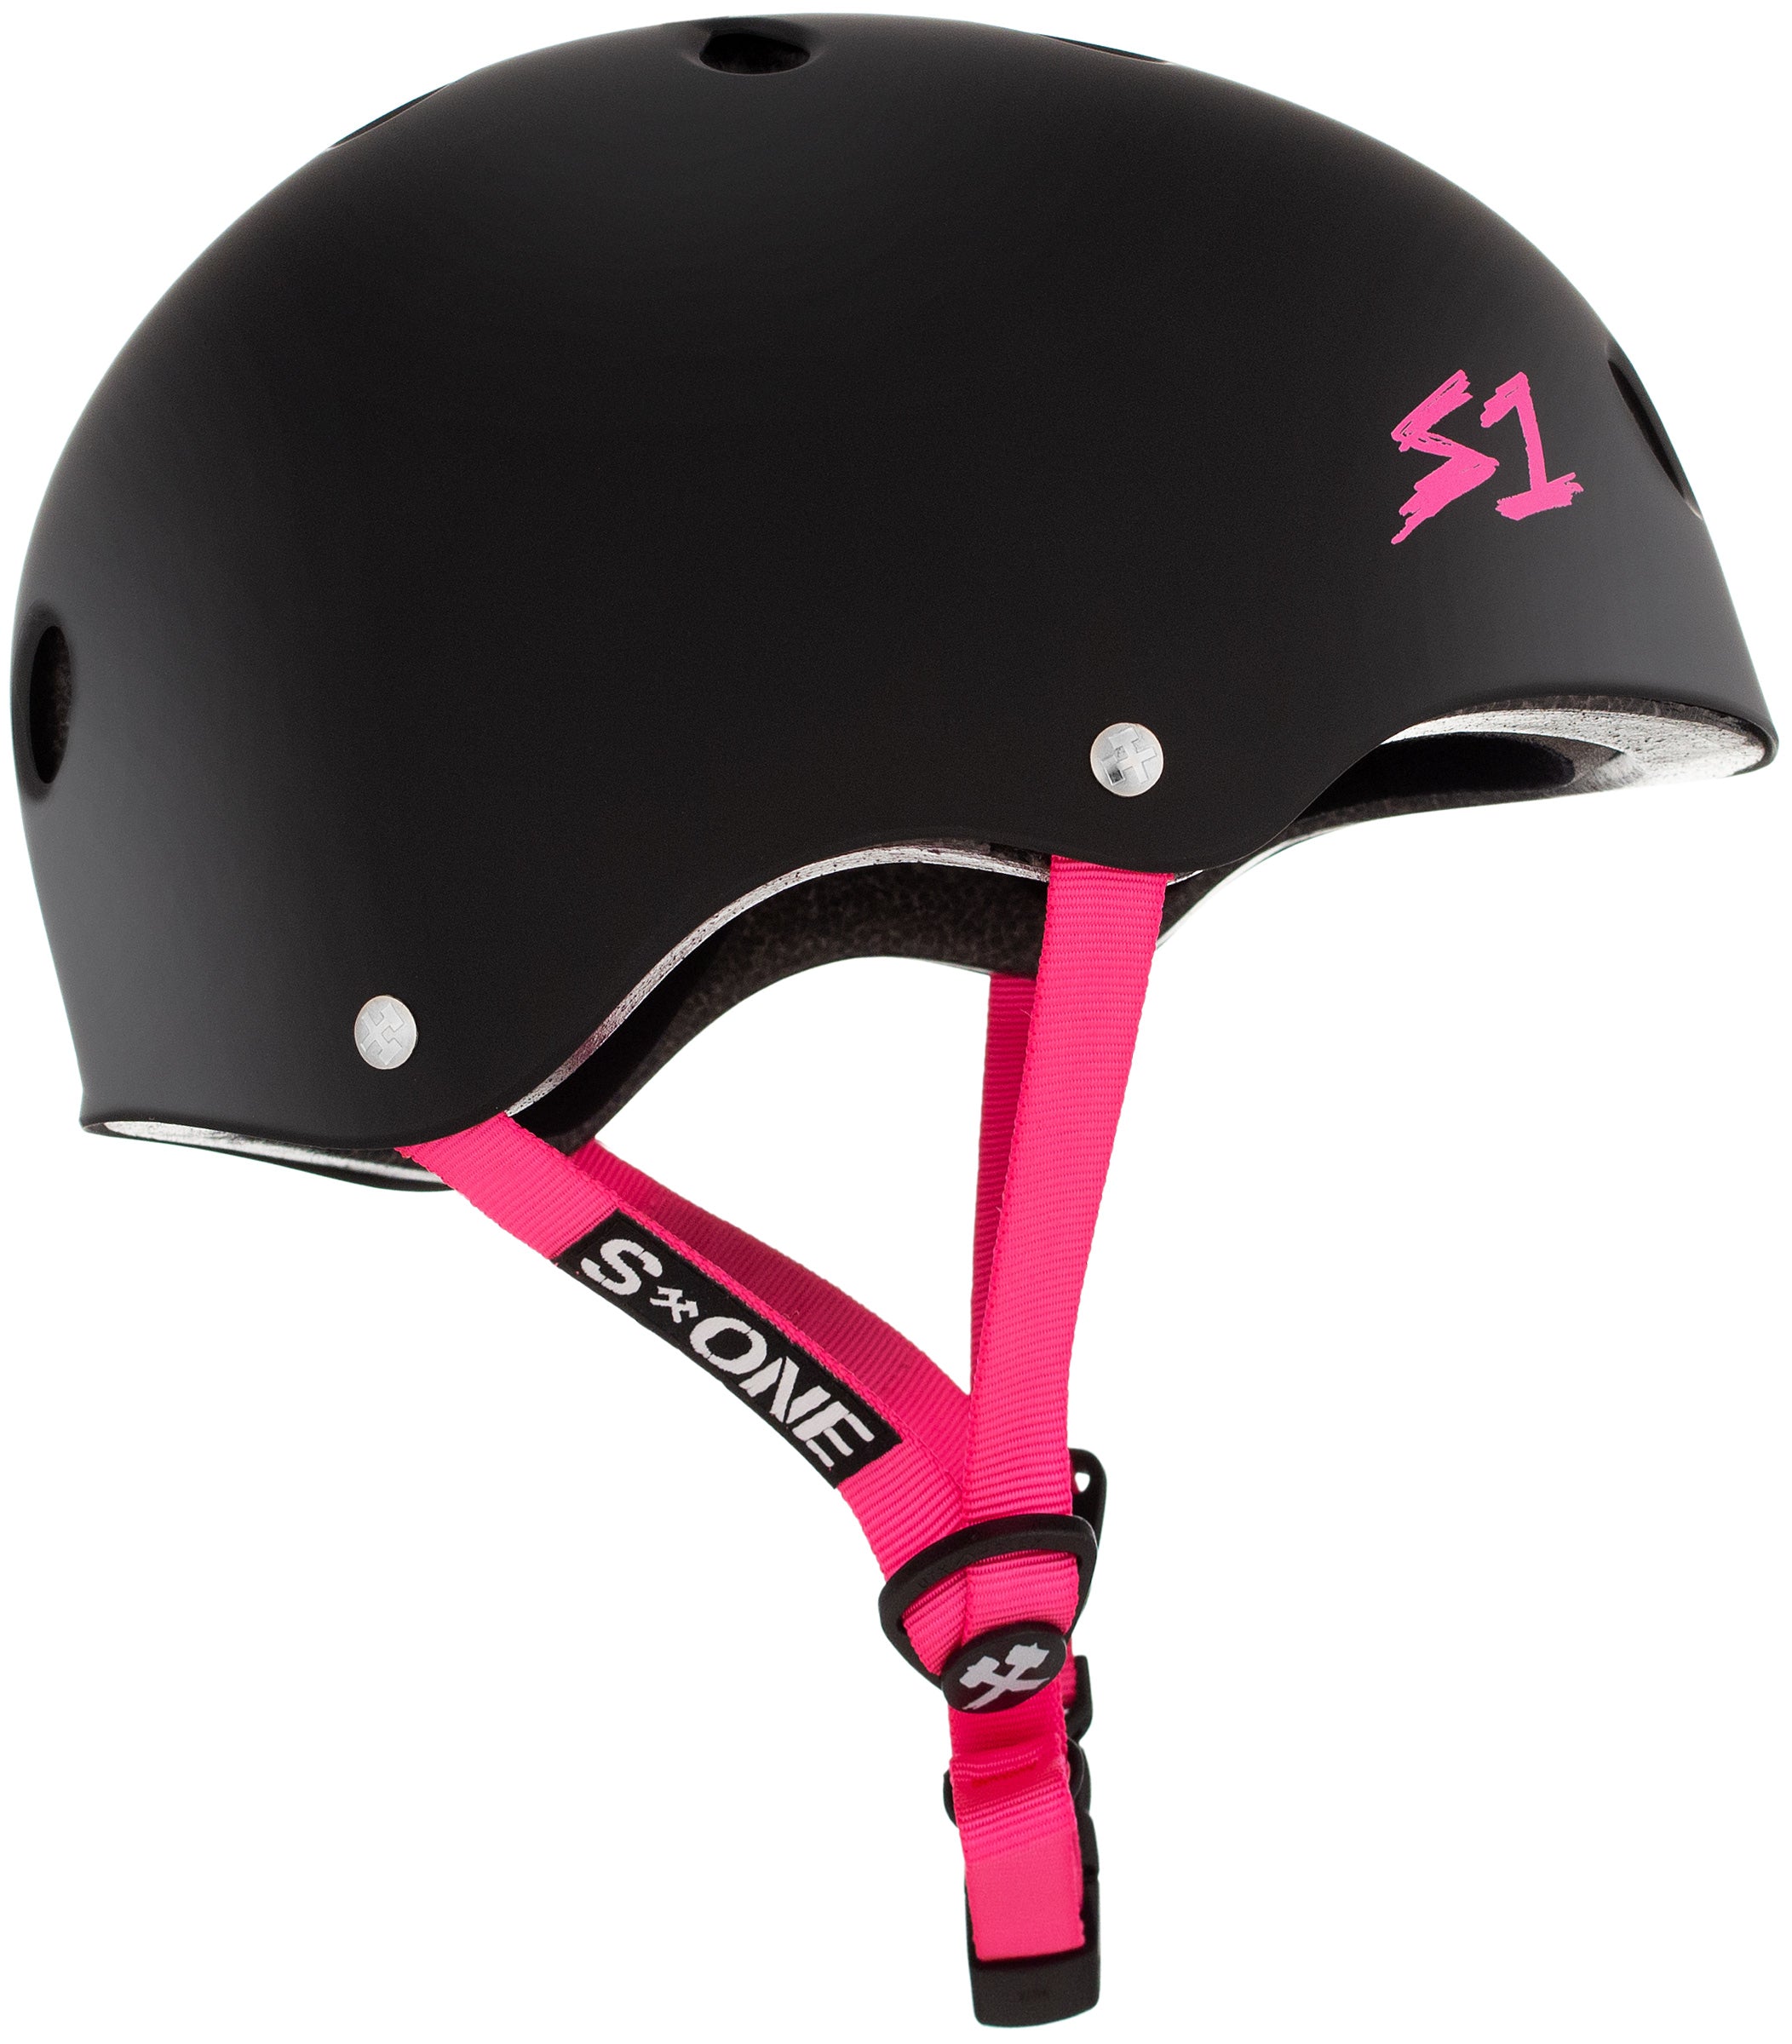 S1 Lifer Helmet - Casque noir mât avec sangles roses